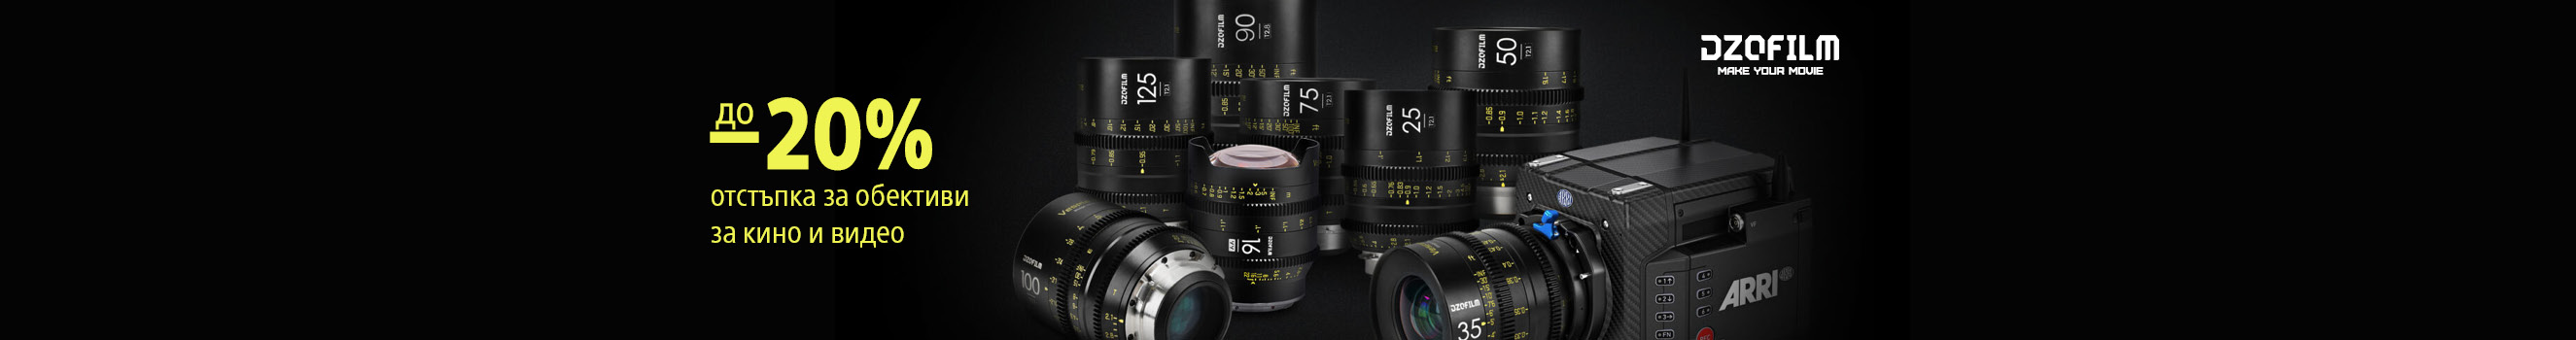  Up to -20% discount for Dzofilm cinema lens